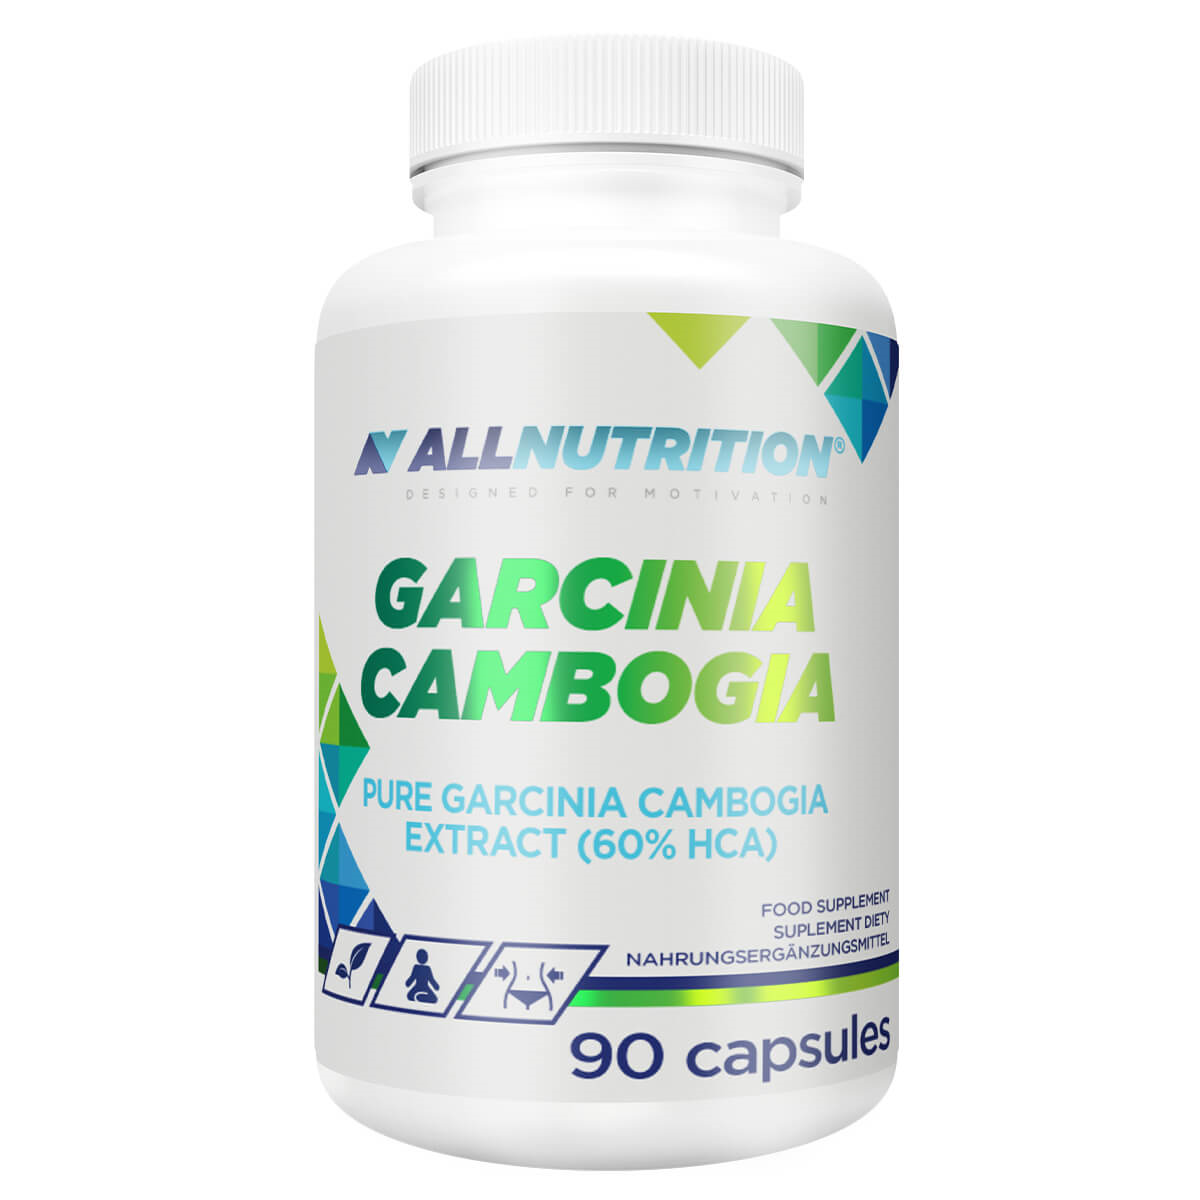 Garcinia Cambogia mg / 60db